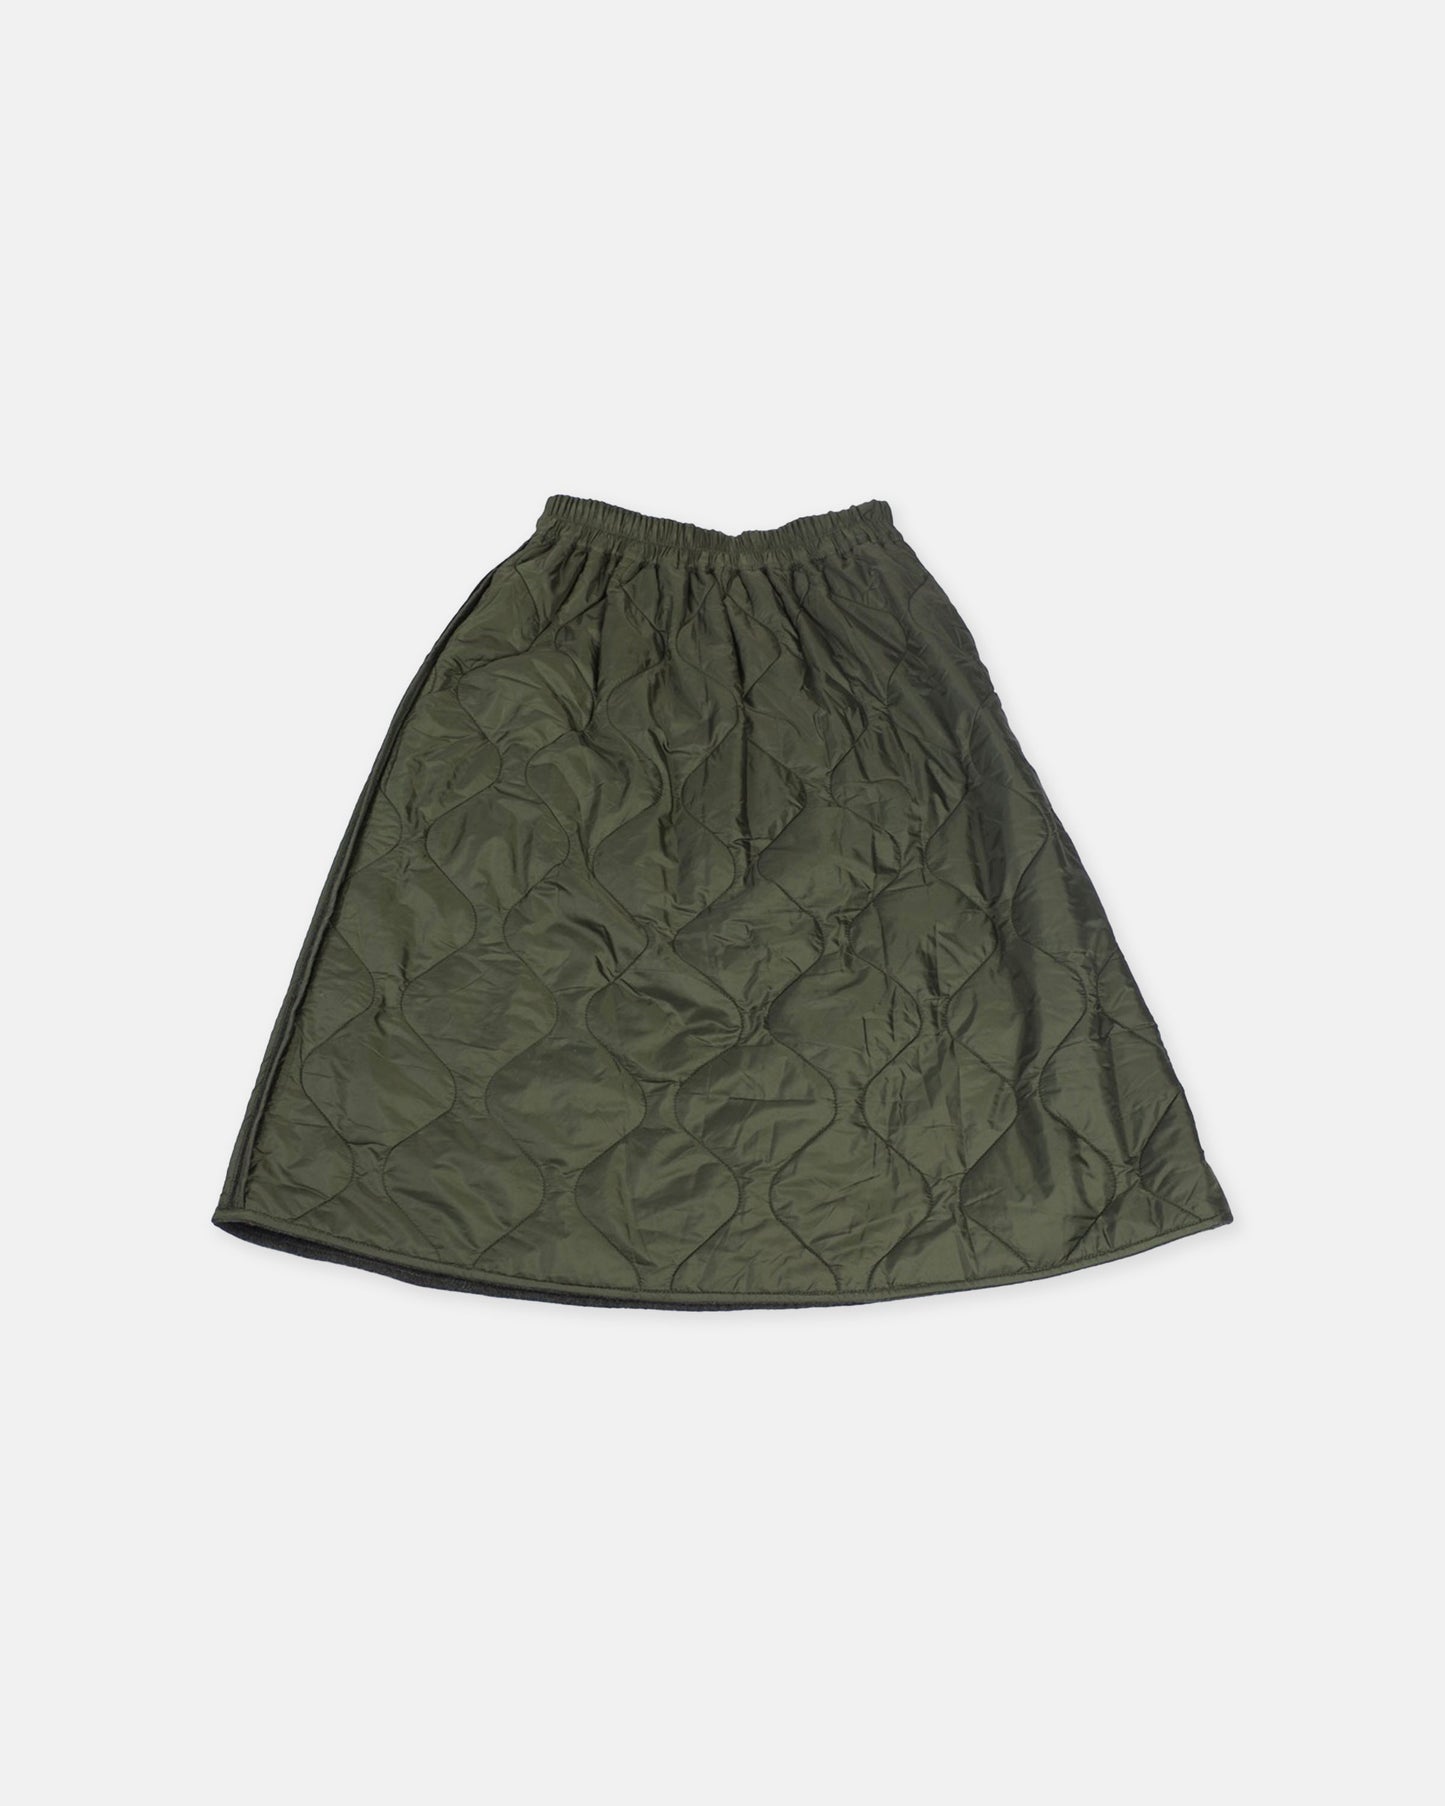 Beams Boy Green/Grey Reversible Skirt